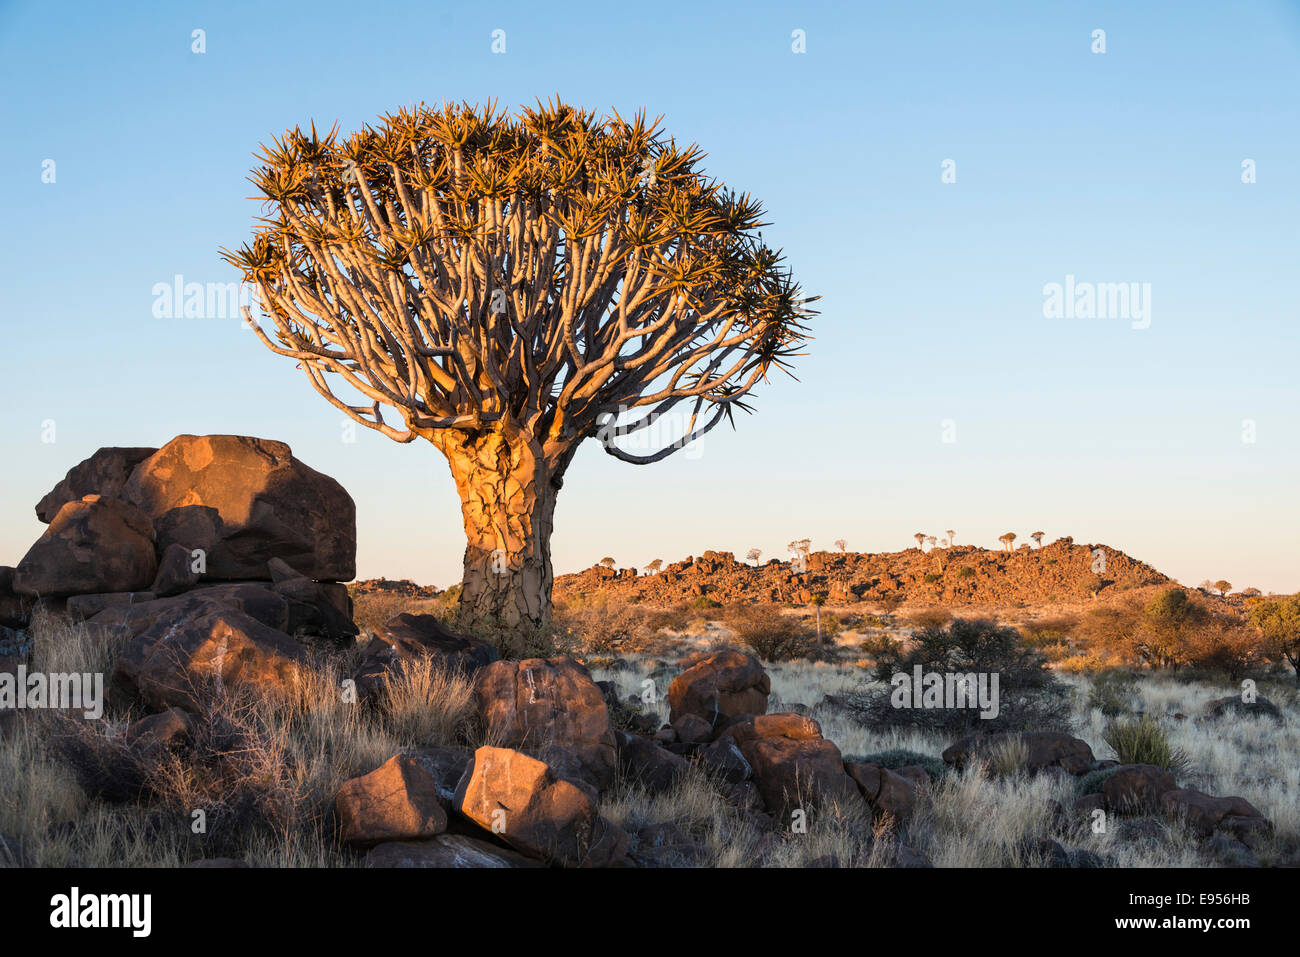 Faretra albero o Kocurbaum (Aloe dichotoma), nei pressi di Keetmanshoop, Namibia Foto Stock